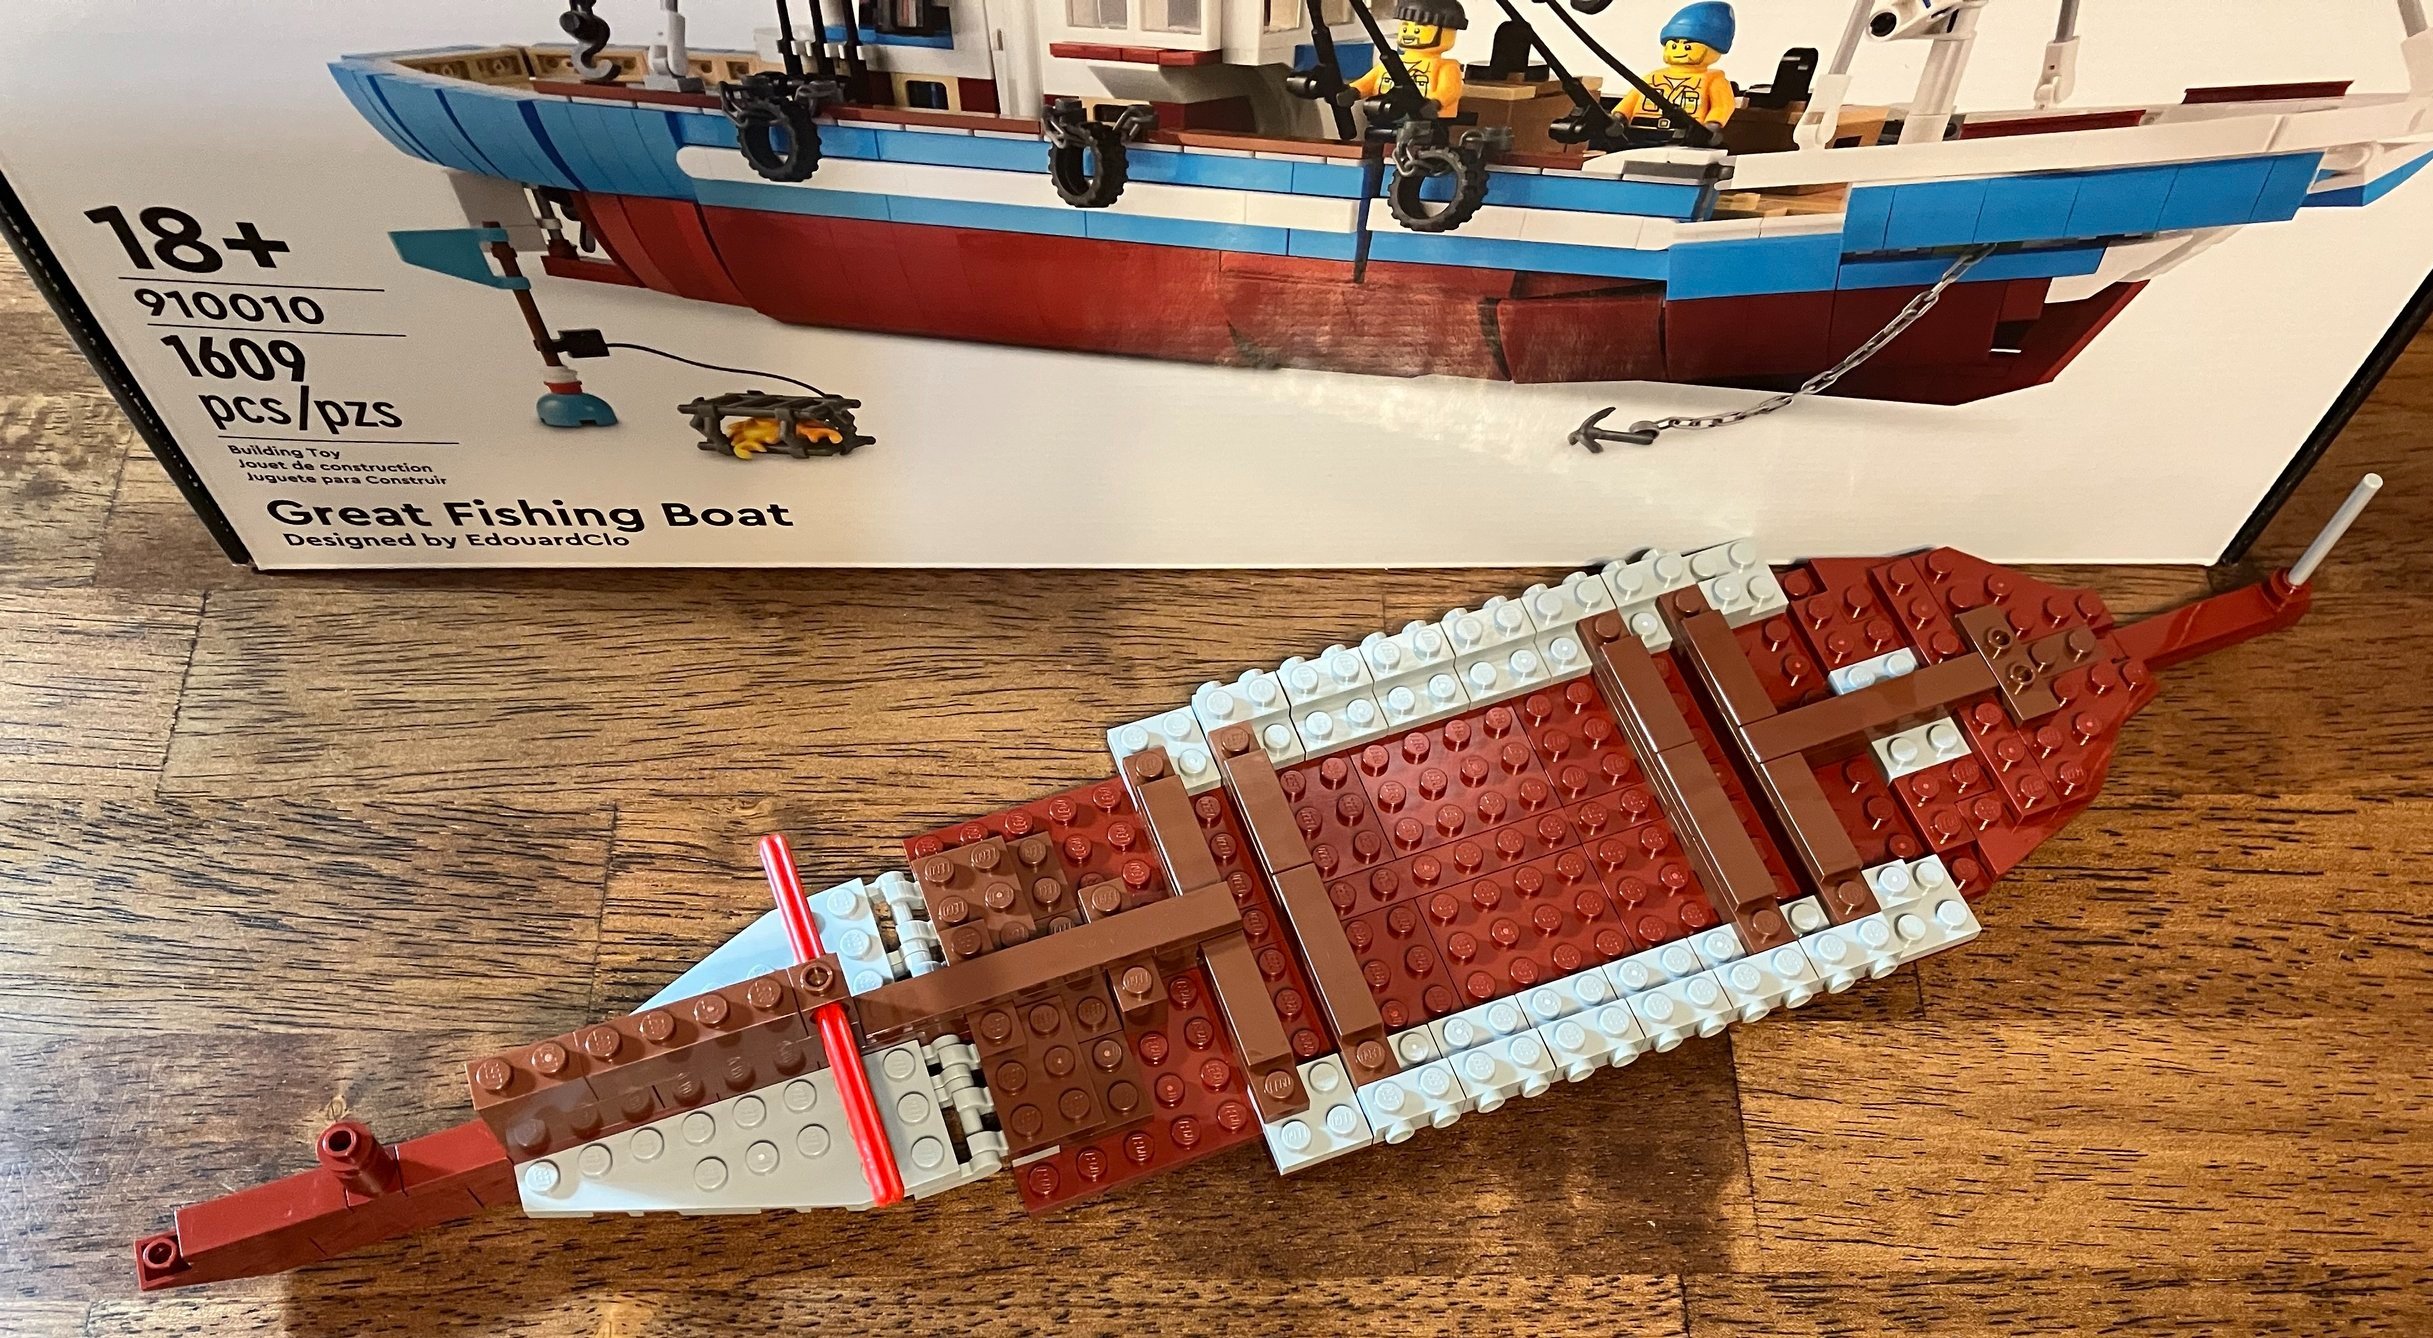 Set Review: #910010-1: Great Fishing Boat - Bricklink Designer